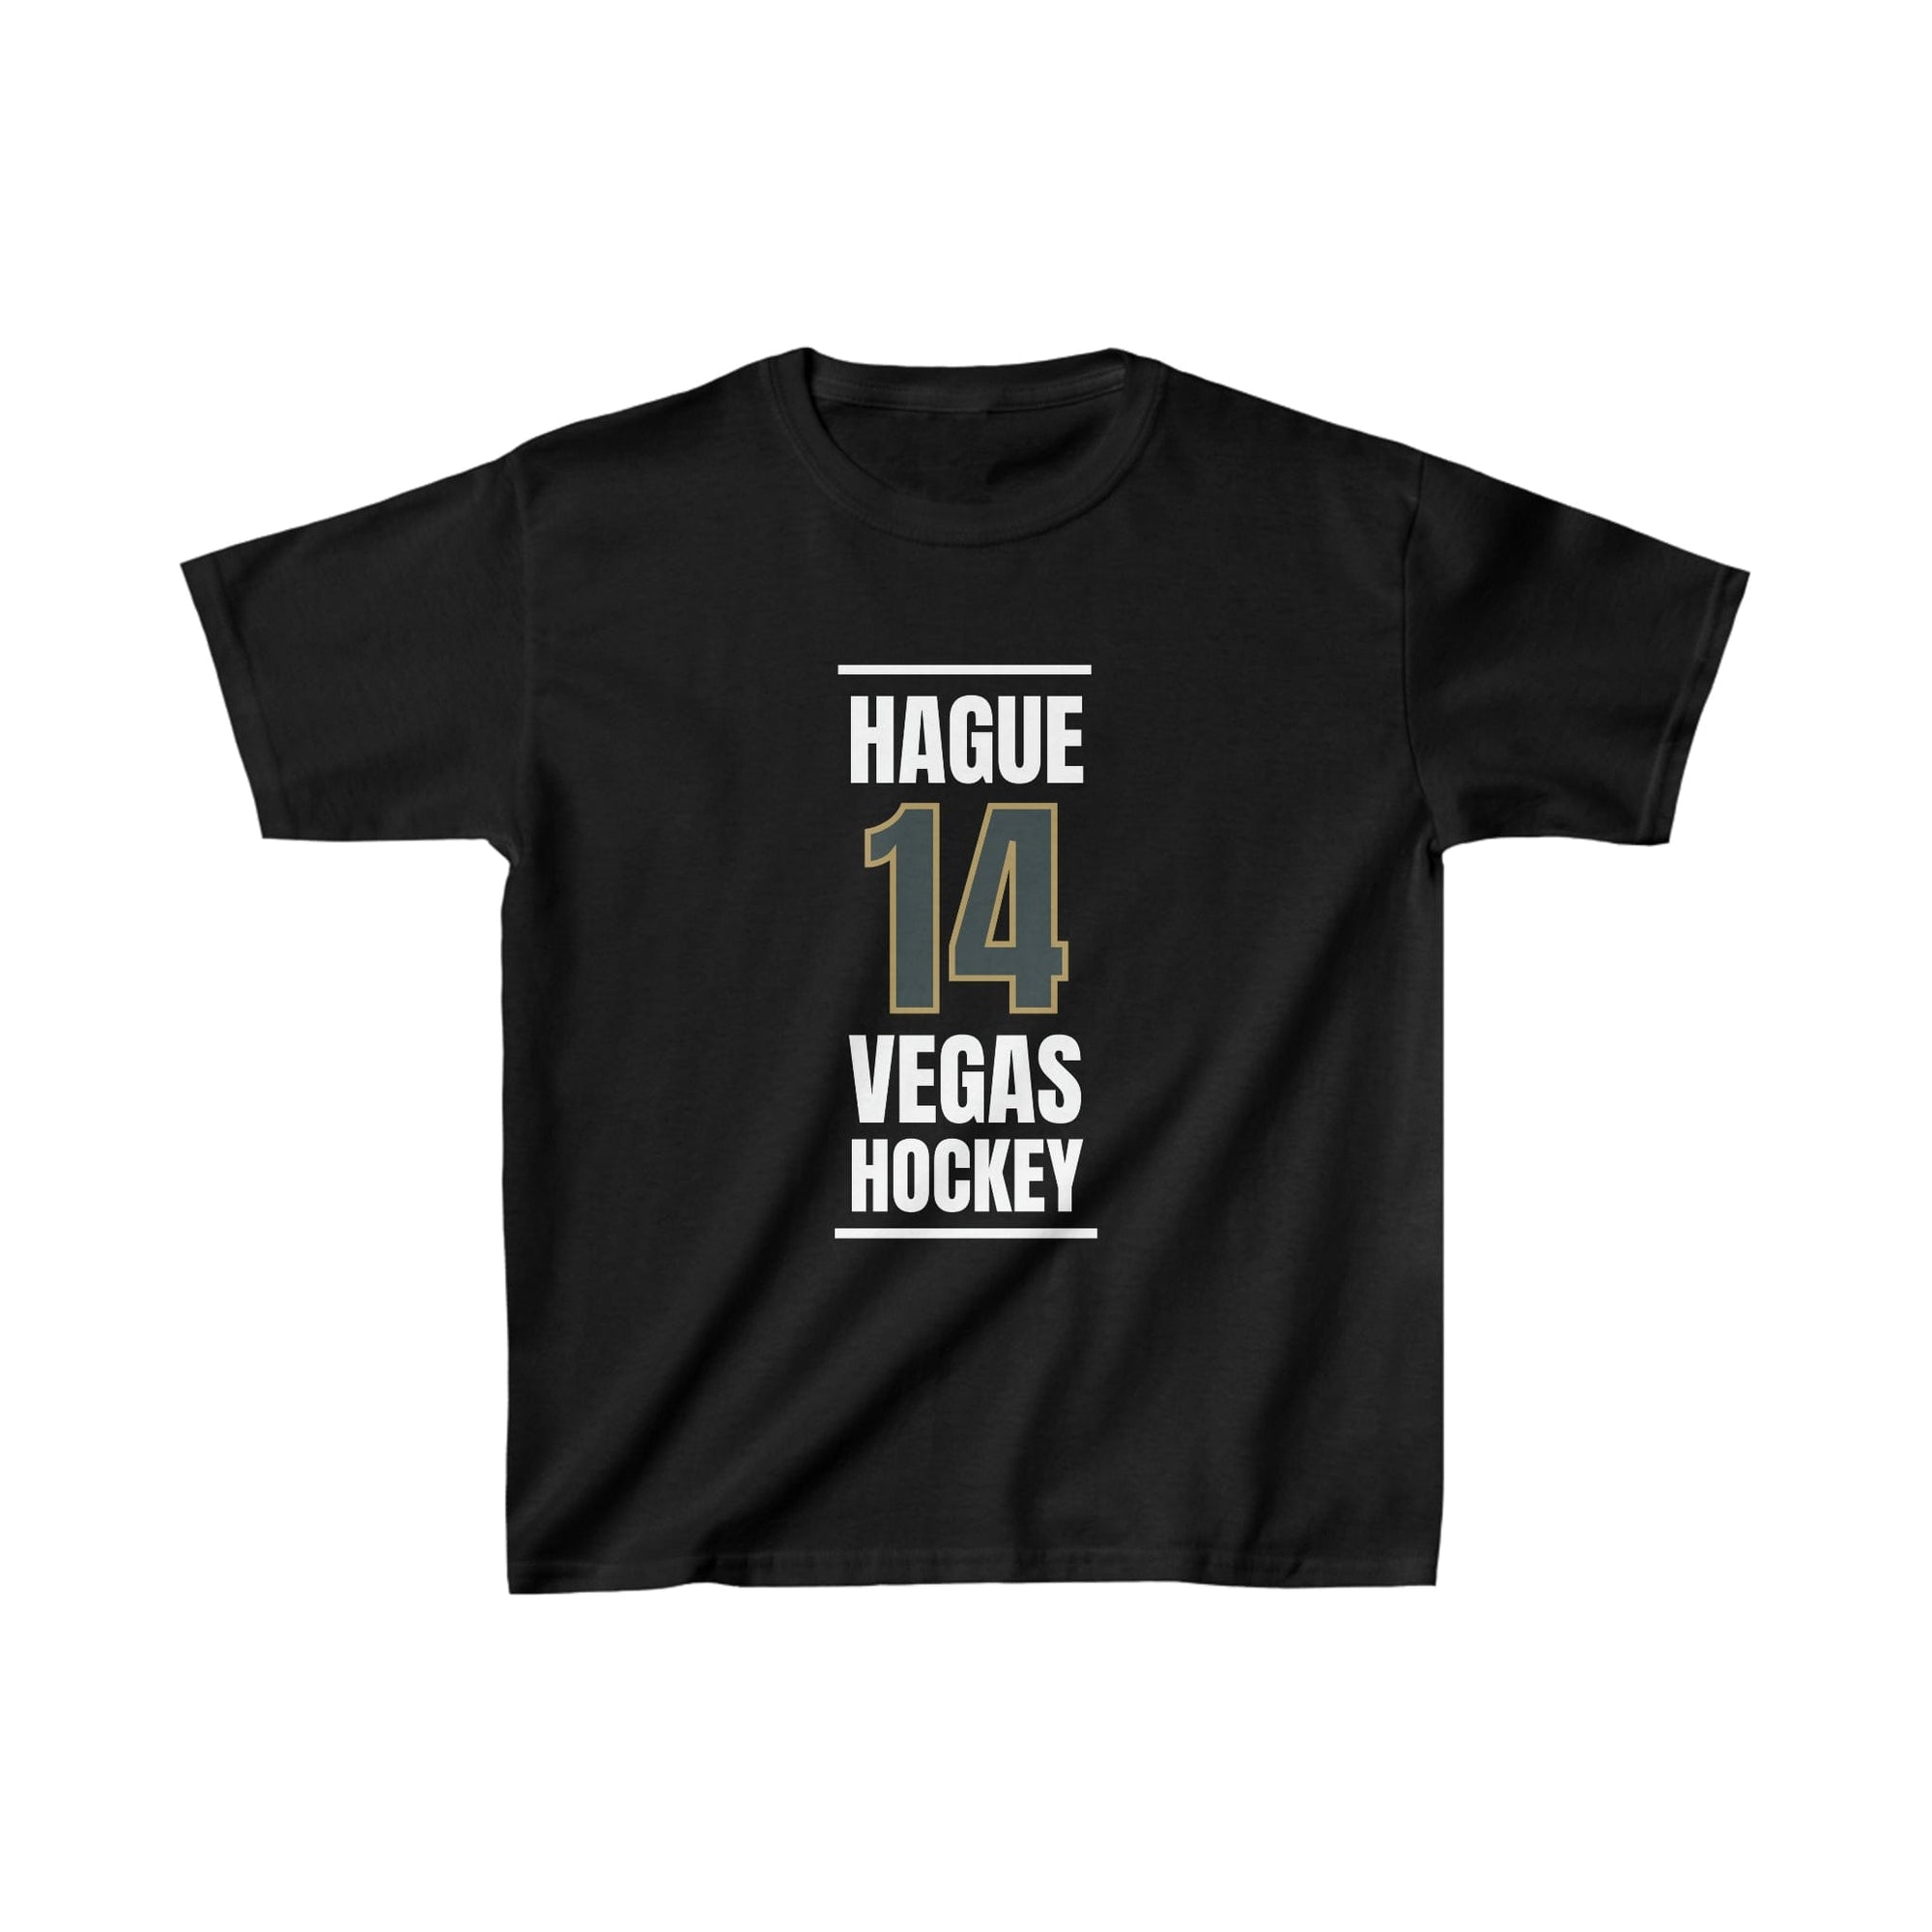 Kids clothes Hague 14 Vegas Hockey Steel Gray Vertical Design Kids Tee